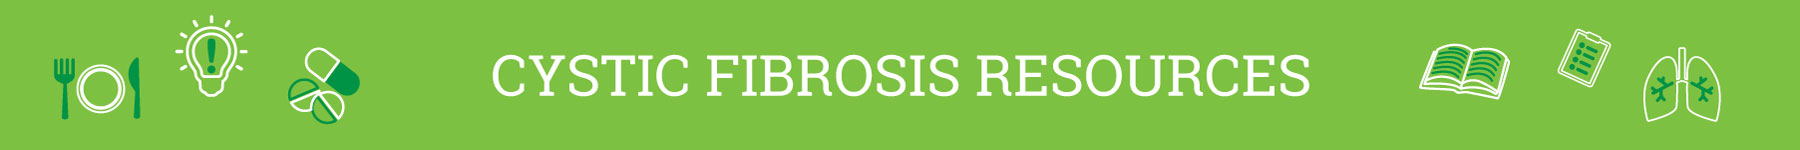 CysticFibrosis.com